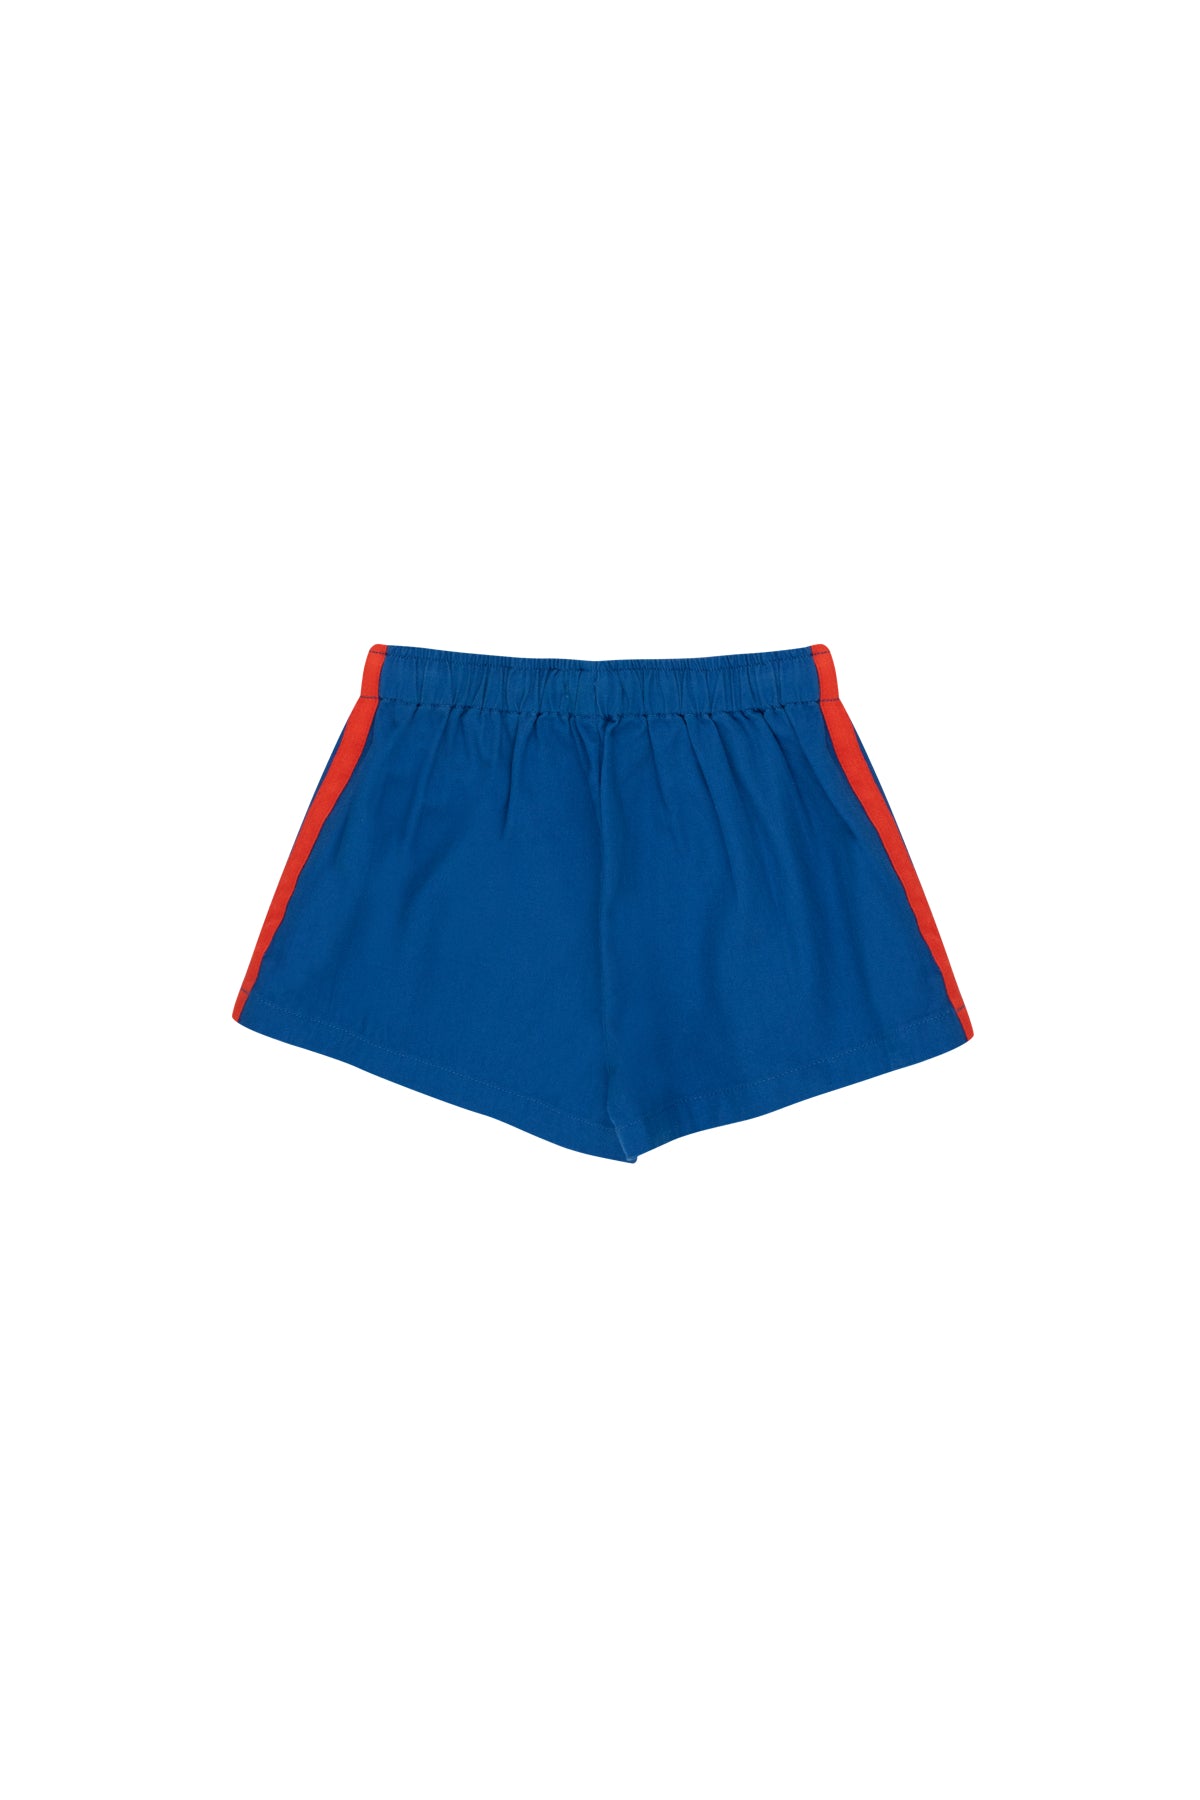 Tiny Cottons - solid shorts - cobalt blue